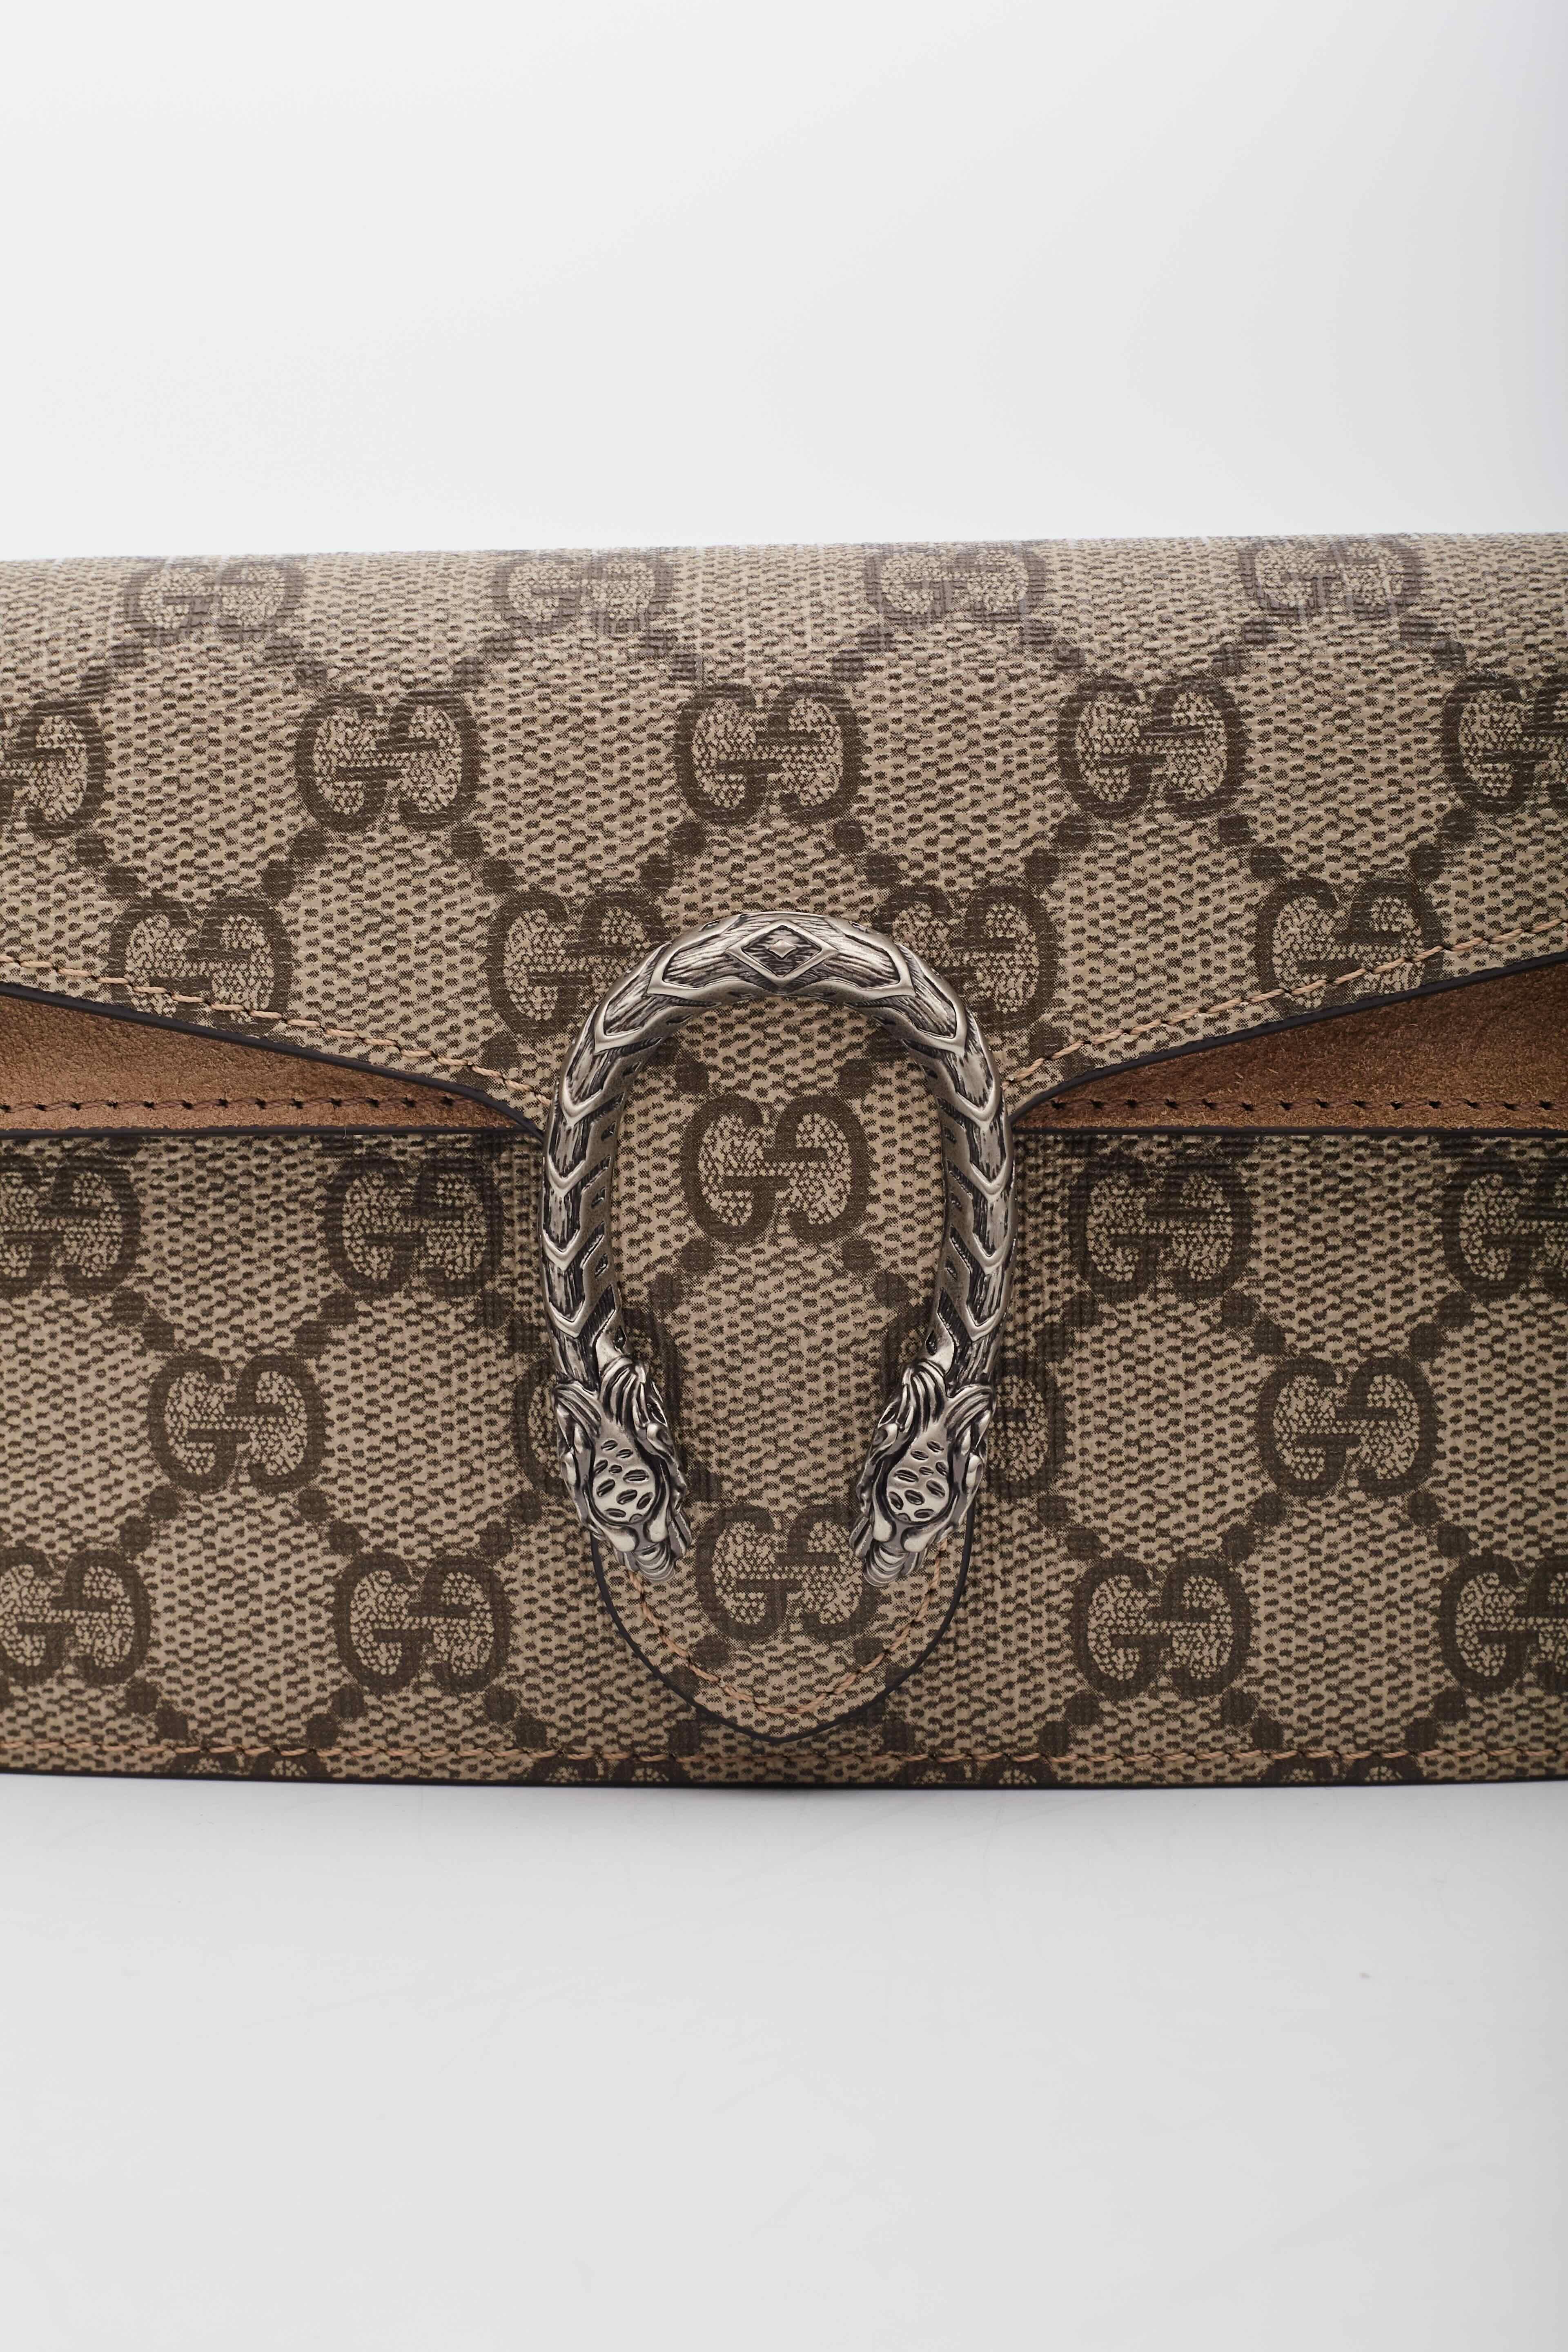 Gucci Super Mini Dionysus Monogram GG Supreme Bag  In Excellent Condition For Sale In Montreal, Quebec